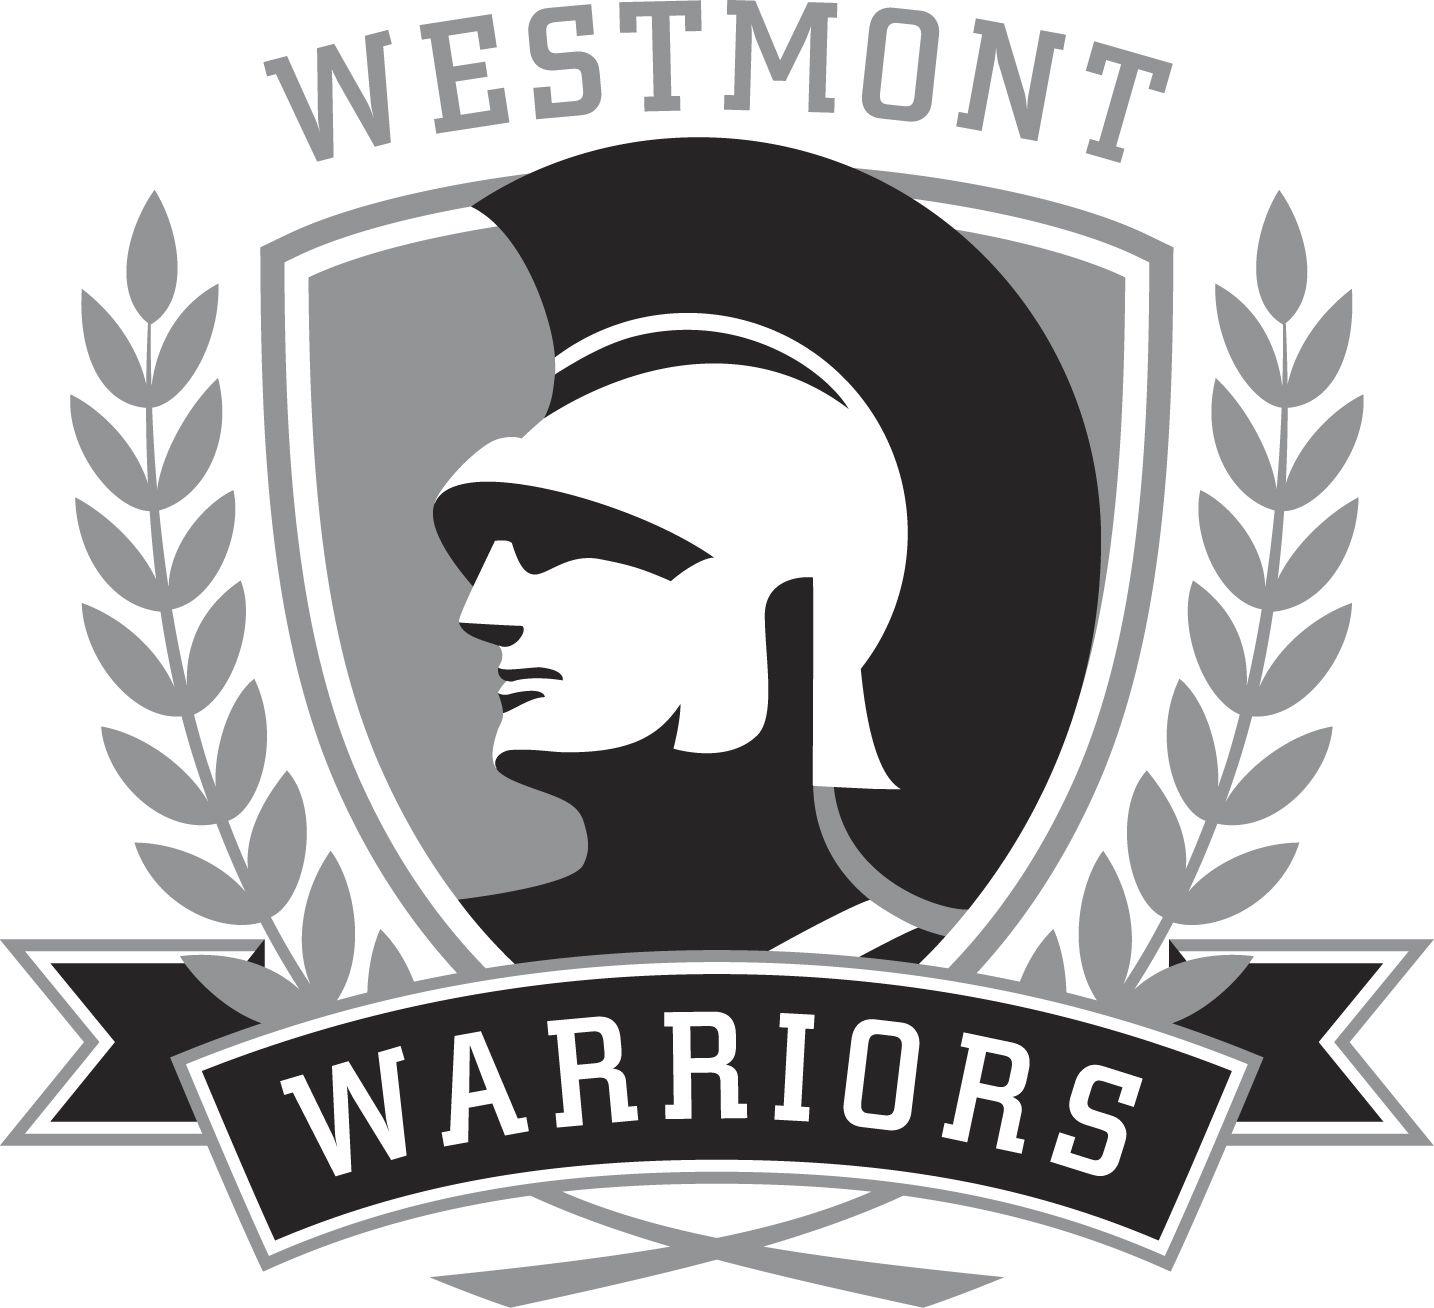 Westmont Logo - Westmont Athletic Logos - Westmont College Athletics